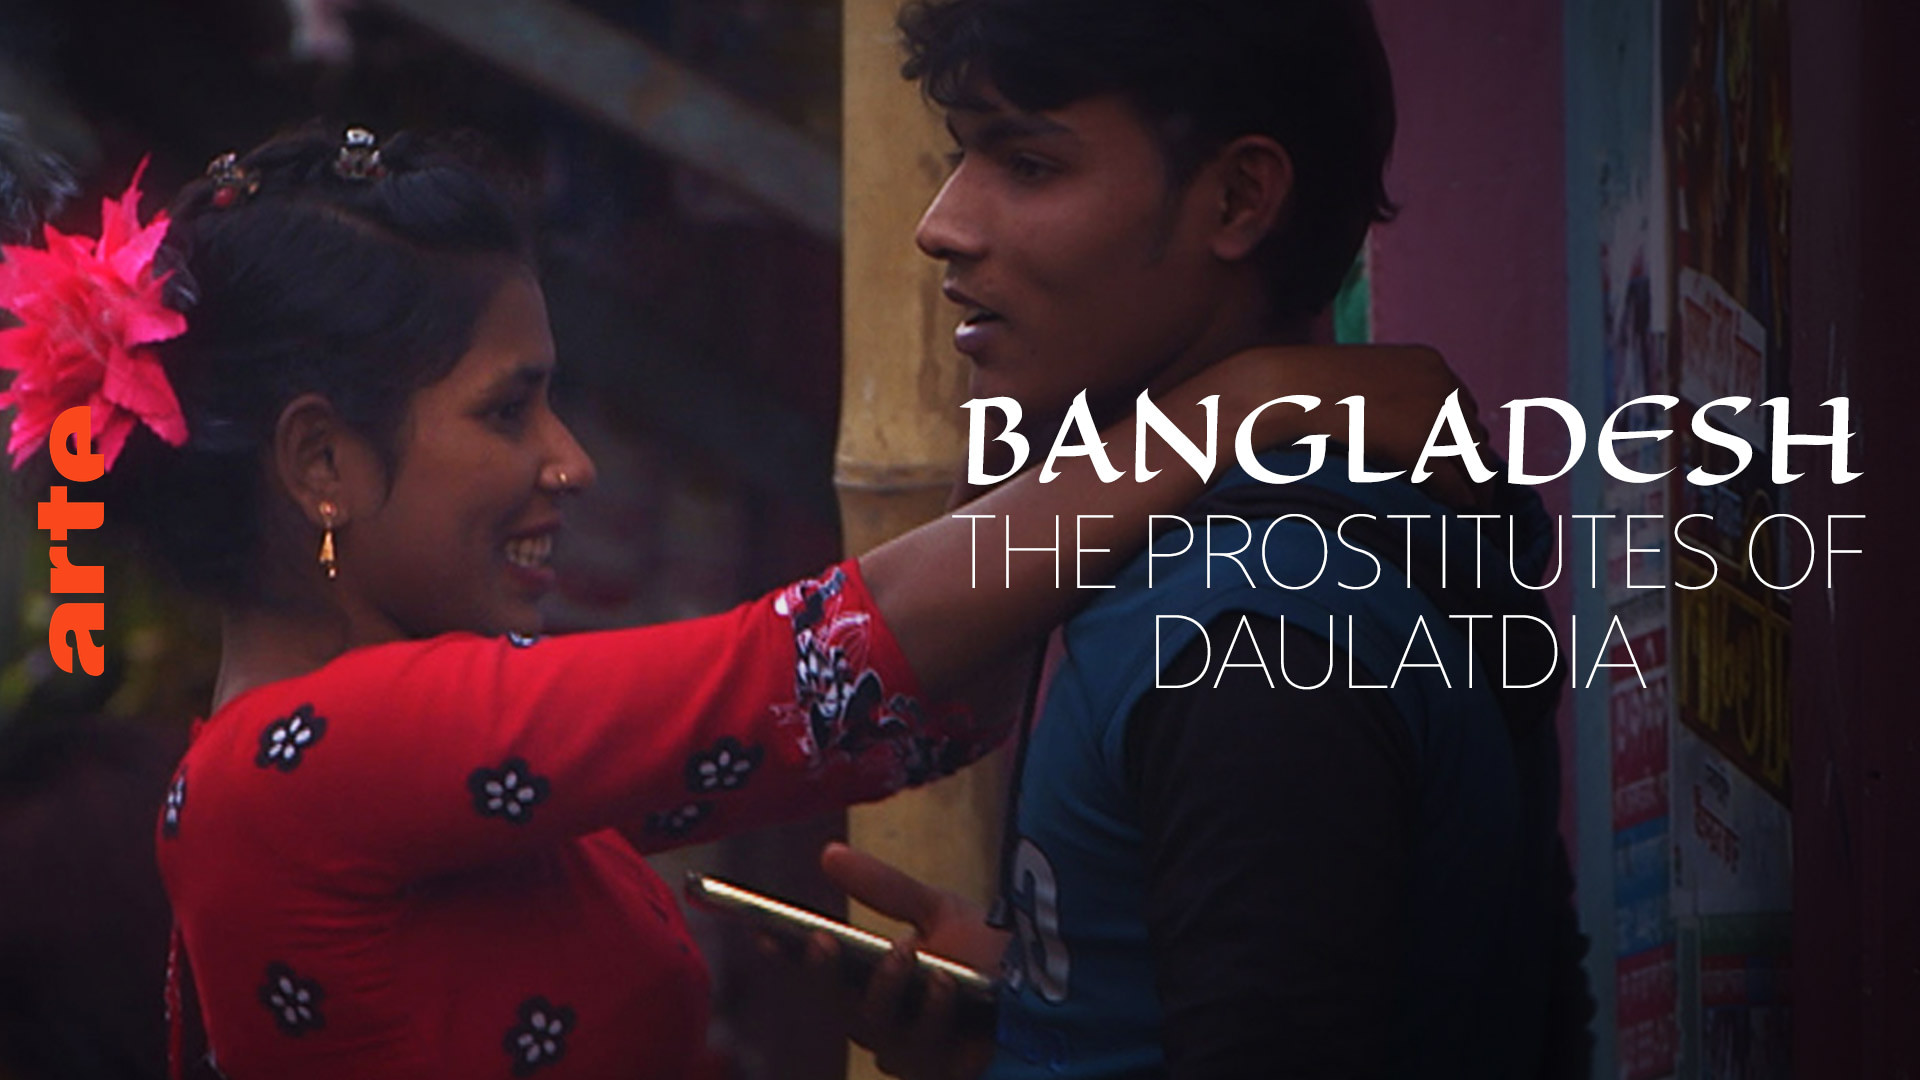 Bengaldesh Women Sex Army - ARTE Reportage - Bangladesh: The Prostitutes of Daulatdia - Watch the full  documentary | ARTE in English